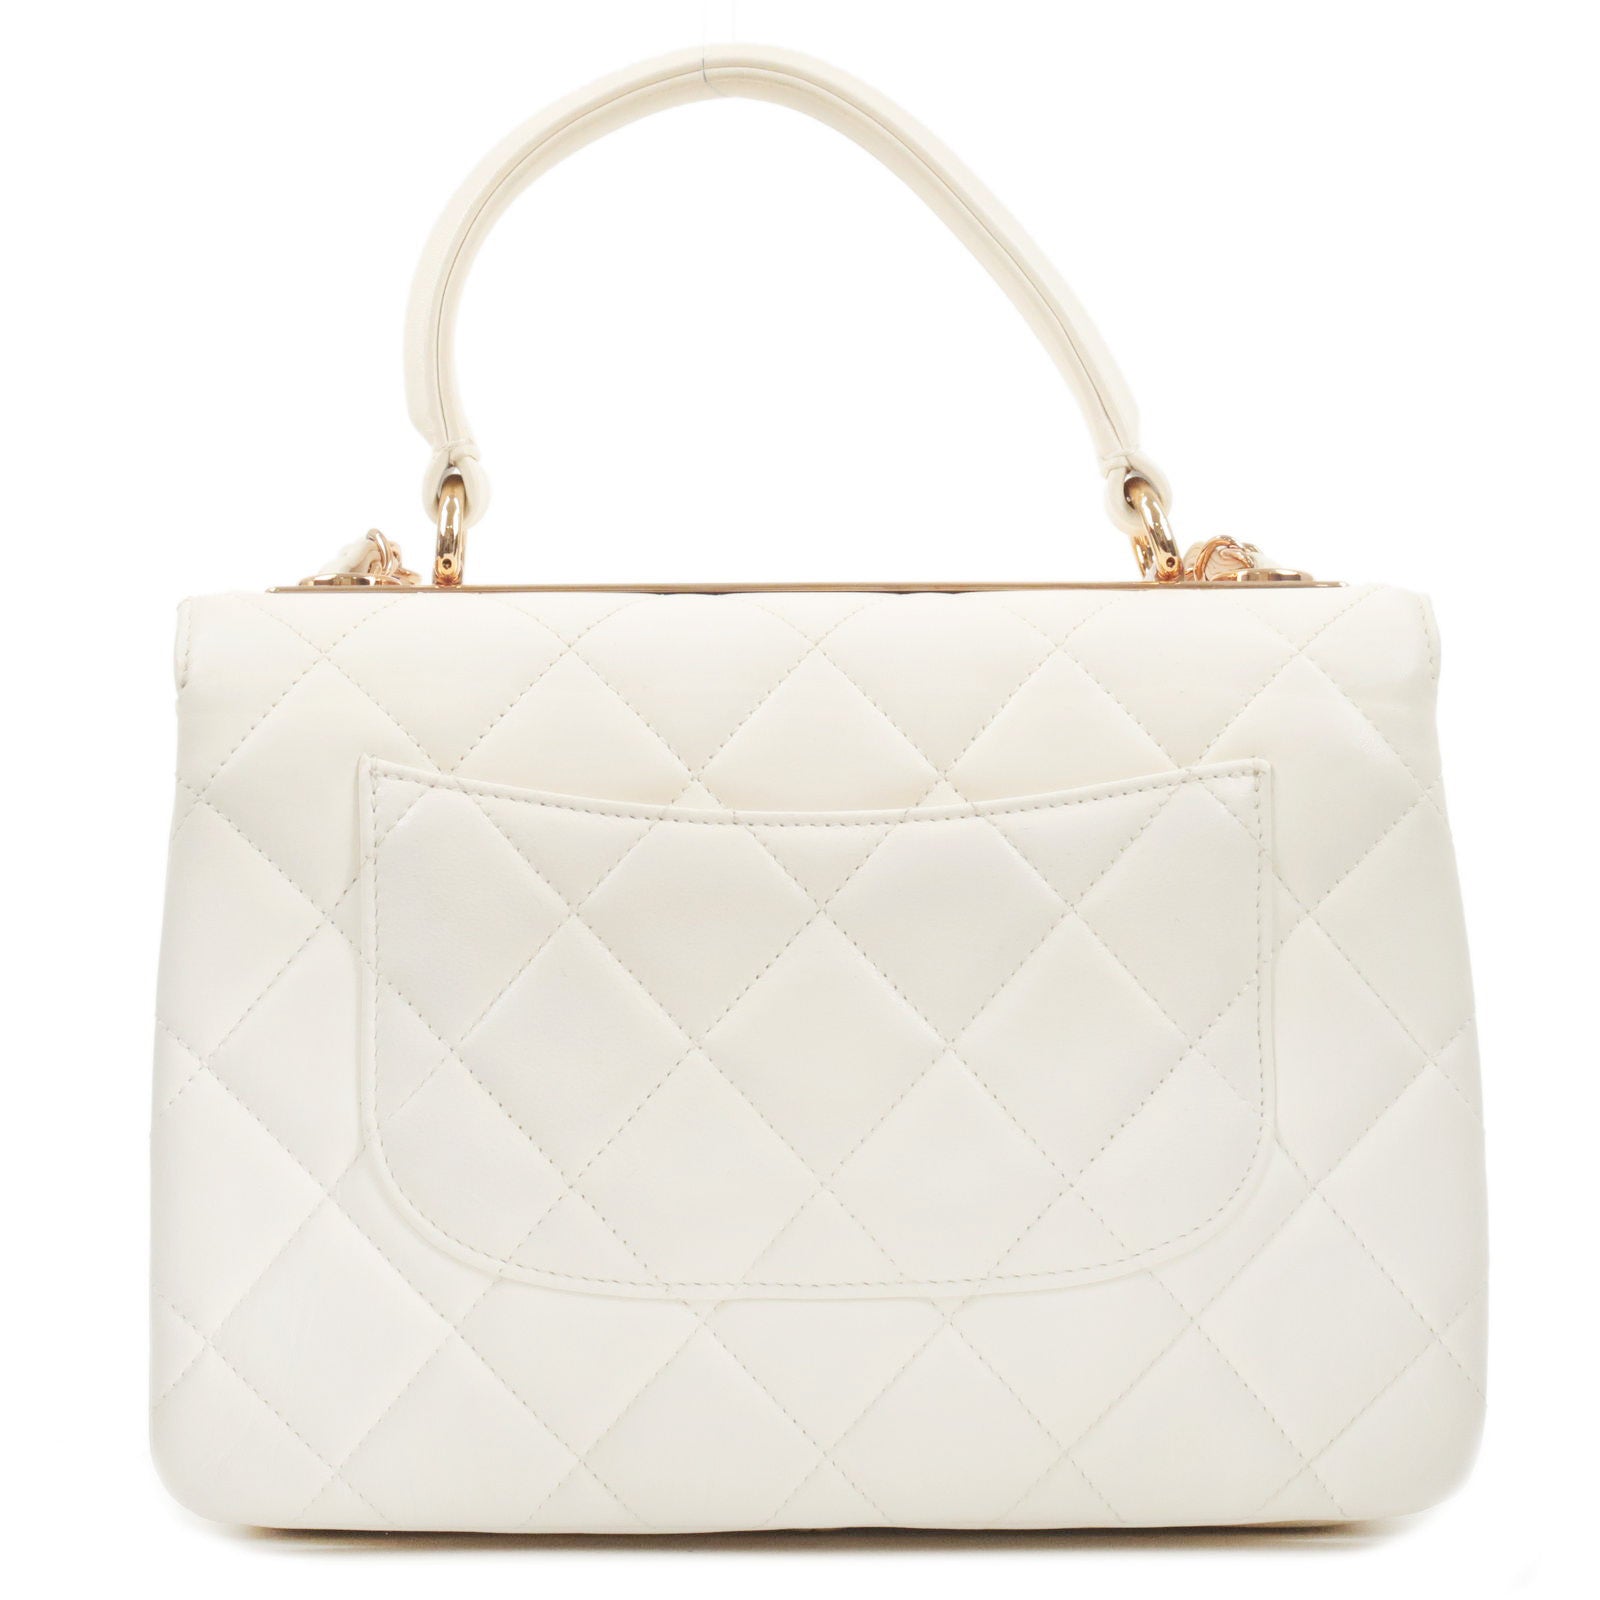 Chanel Trendy CC Top Handle Shoulder Bag COMPLETE 22B - MINT CONDITION